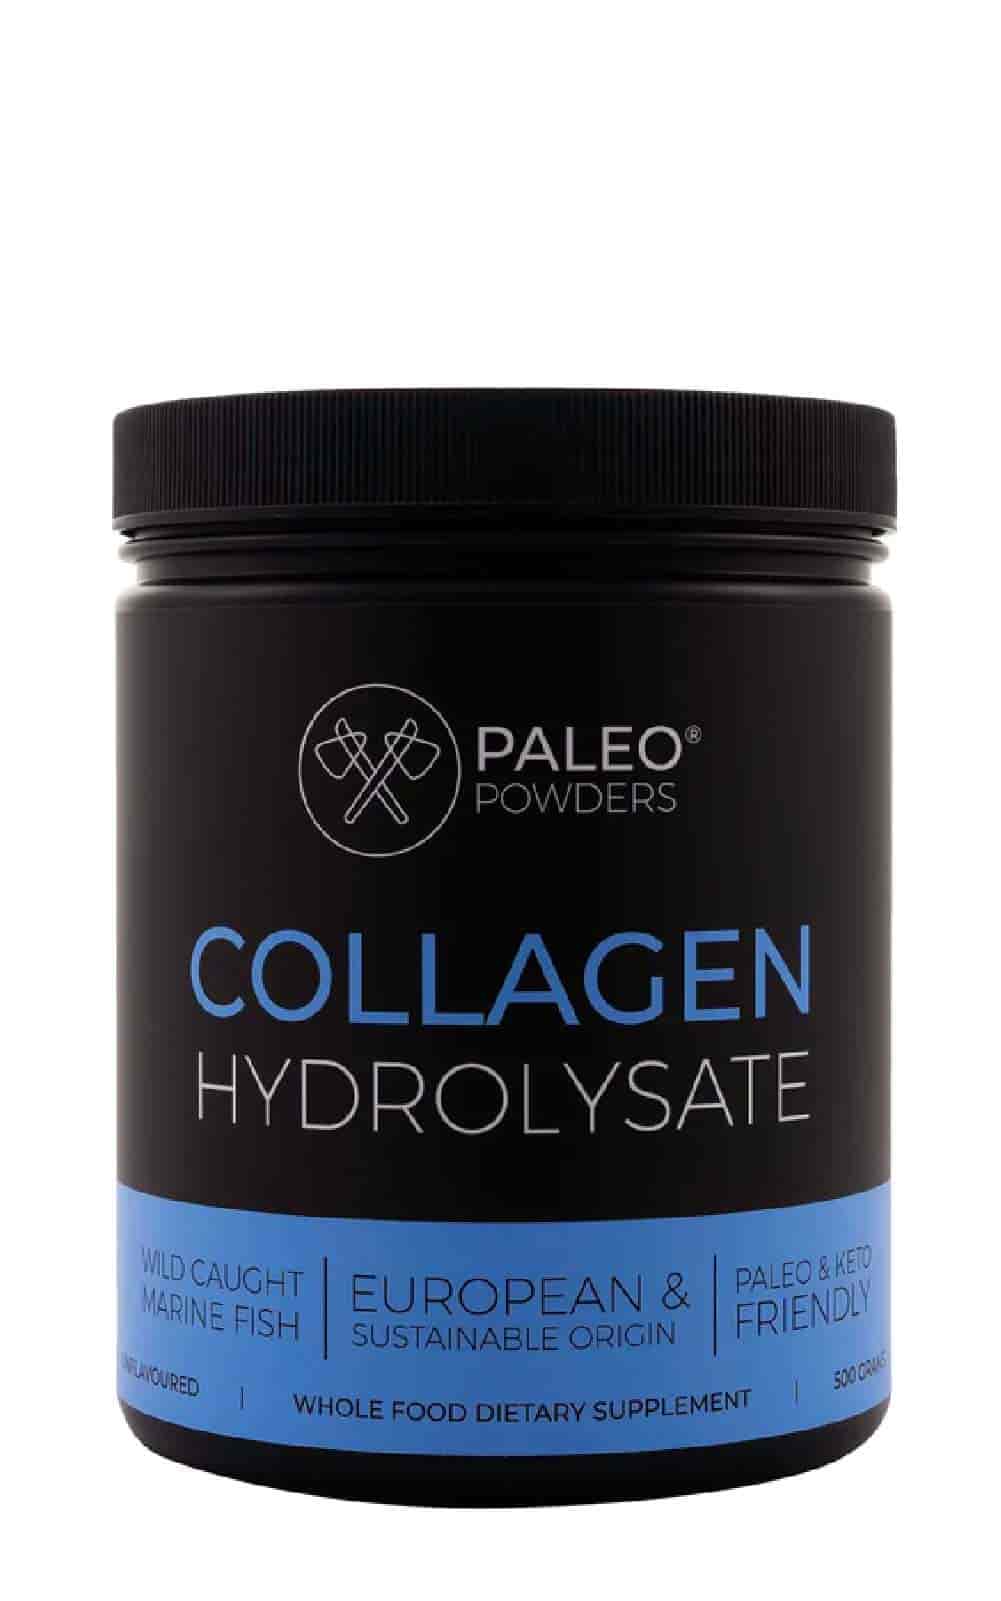 Buy Paleo Powders Collagen Hydrolysate - Wild Caught Marine Fish at LiveHelfi